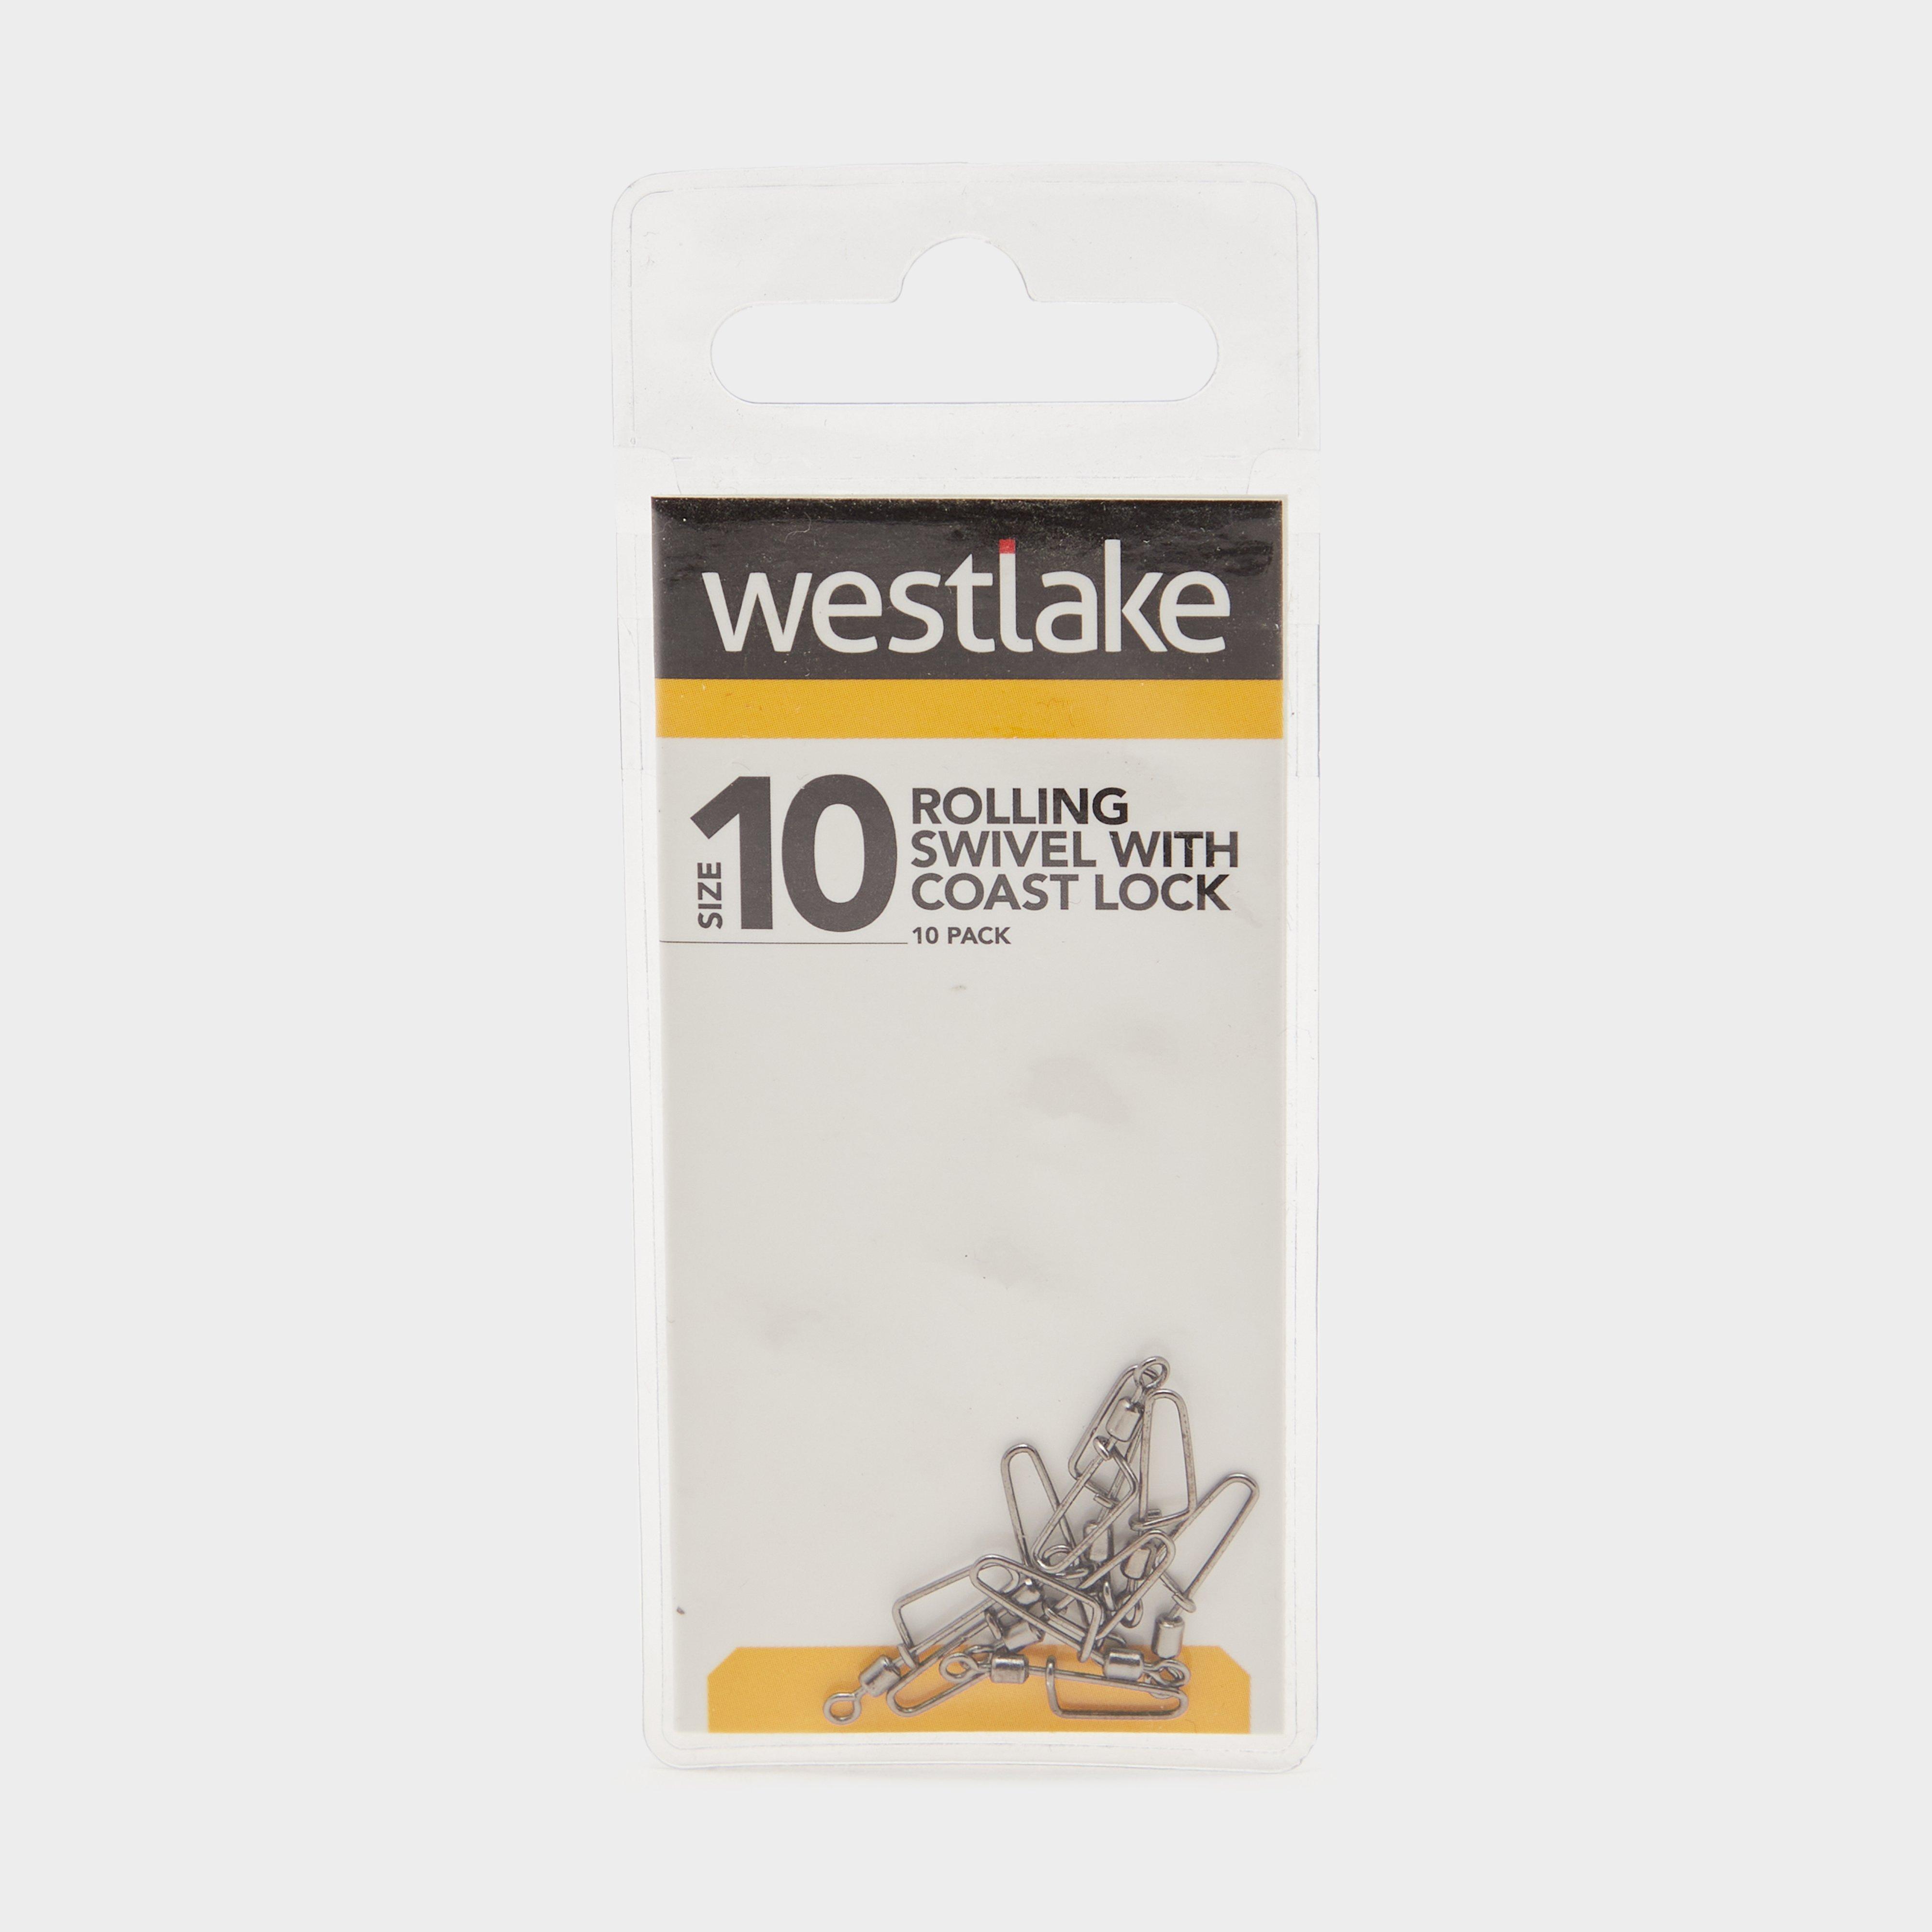 Westlake Swivel Coast Lock Size 10 (12kg)